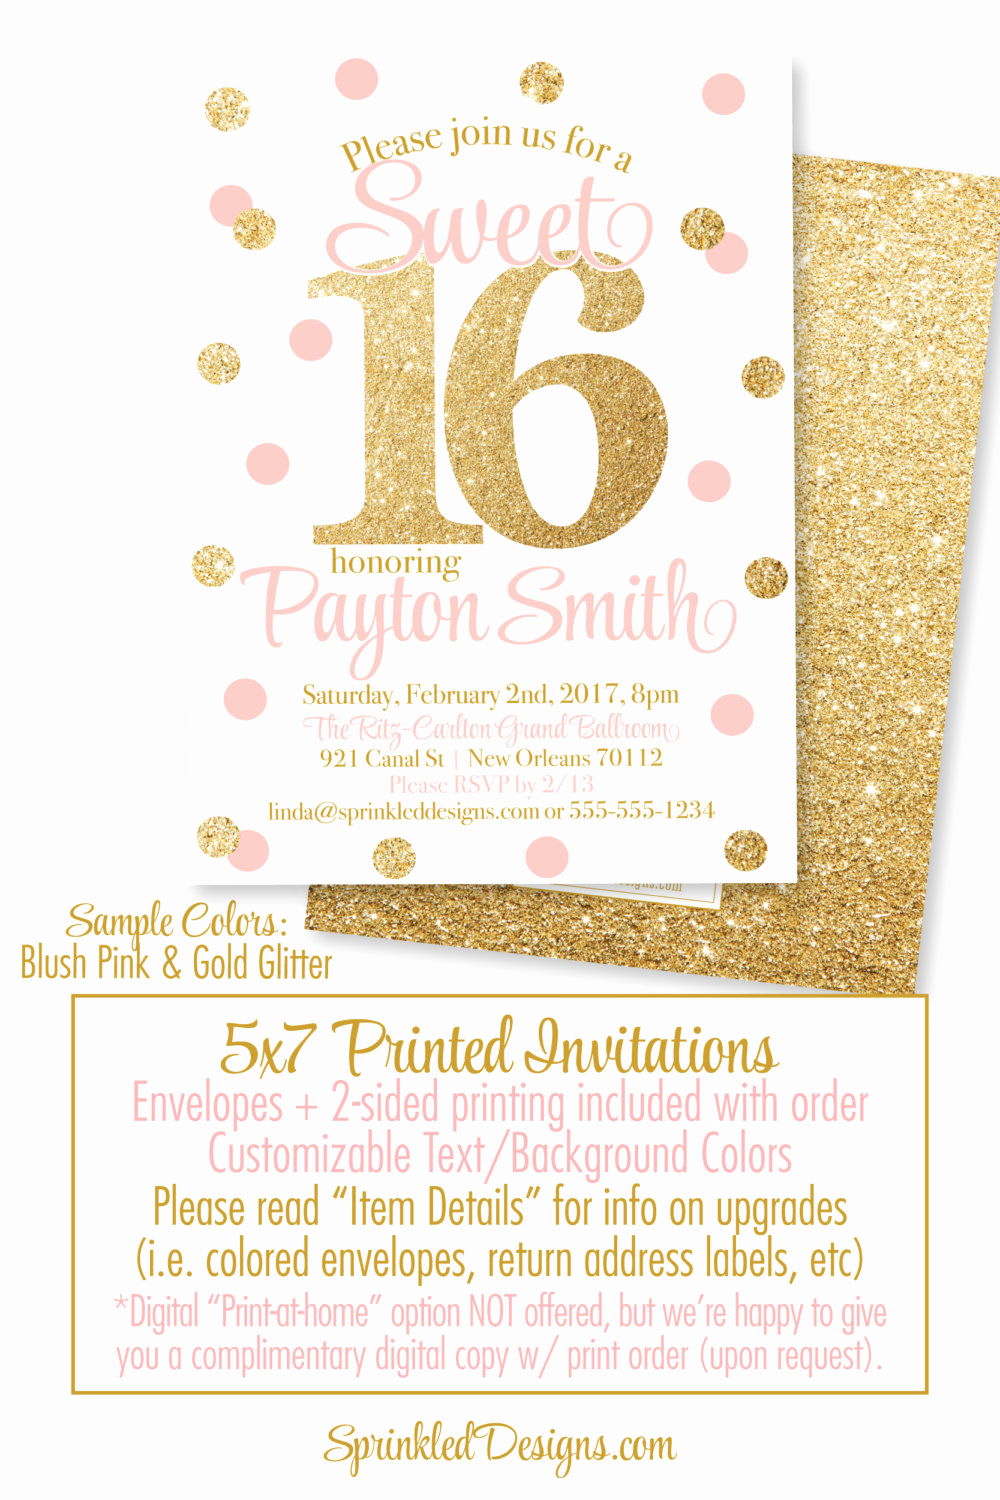 Sweet Sixteen Invitation Wording Awesome Sweet 16 Invitations Pink and Gold Glitter Sweet Sixteen